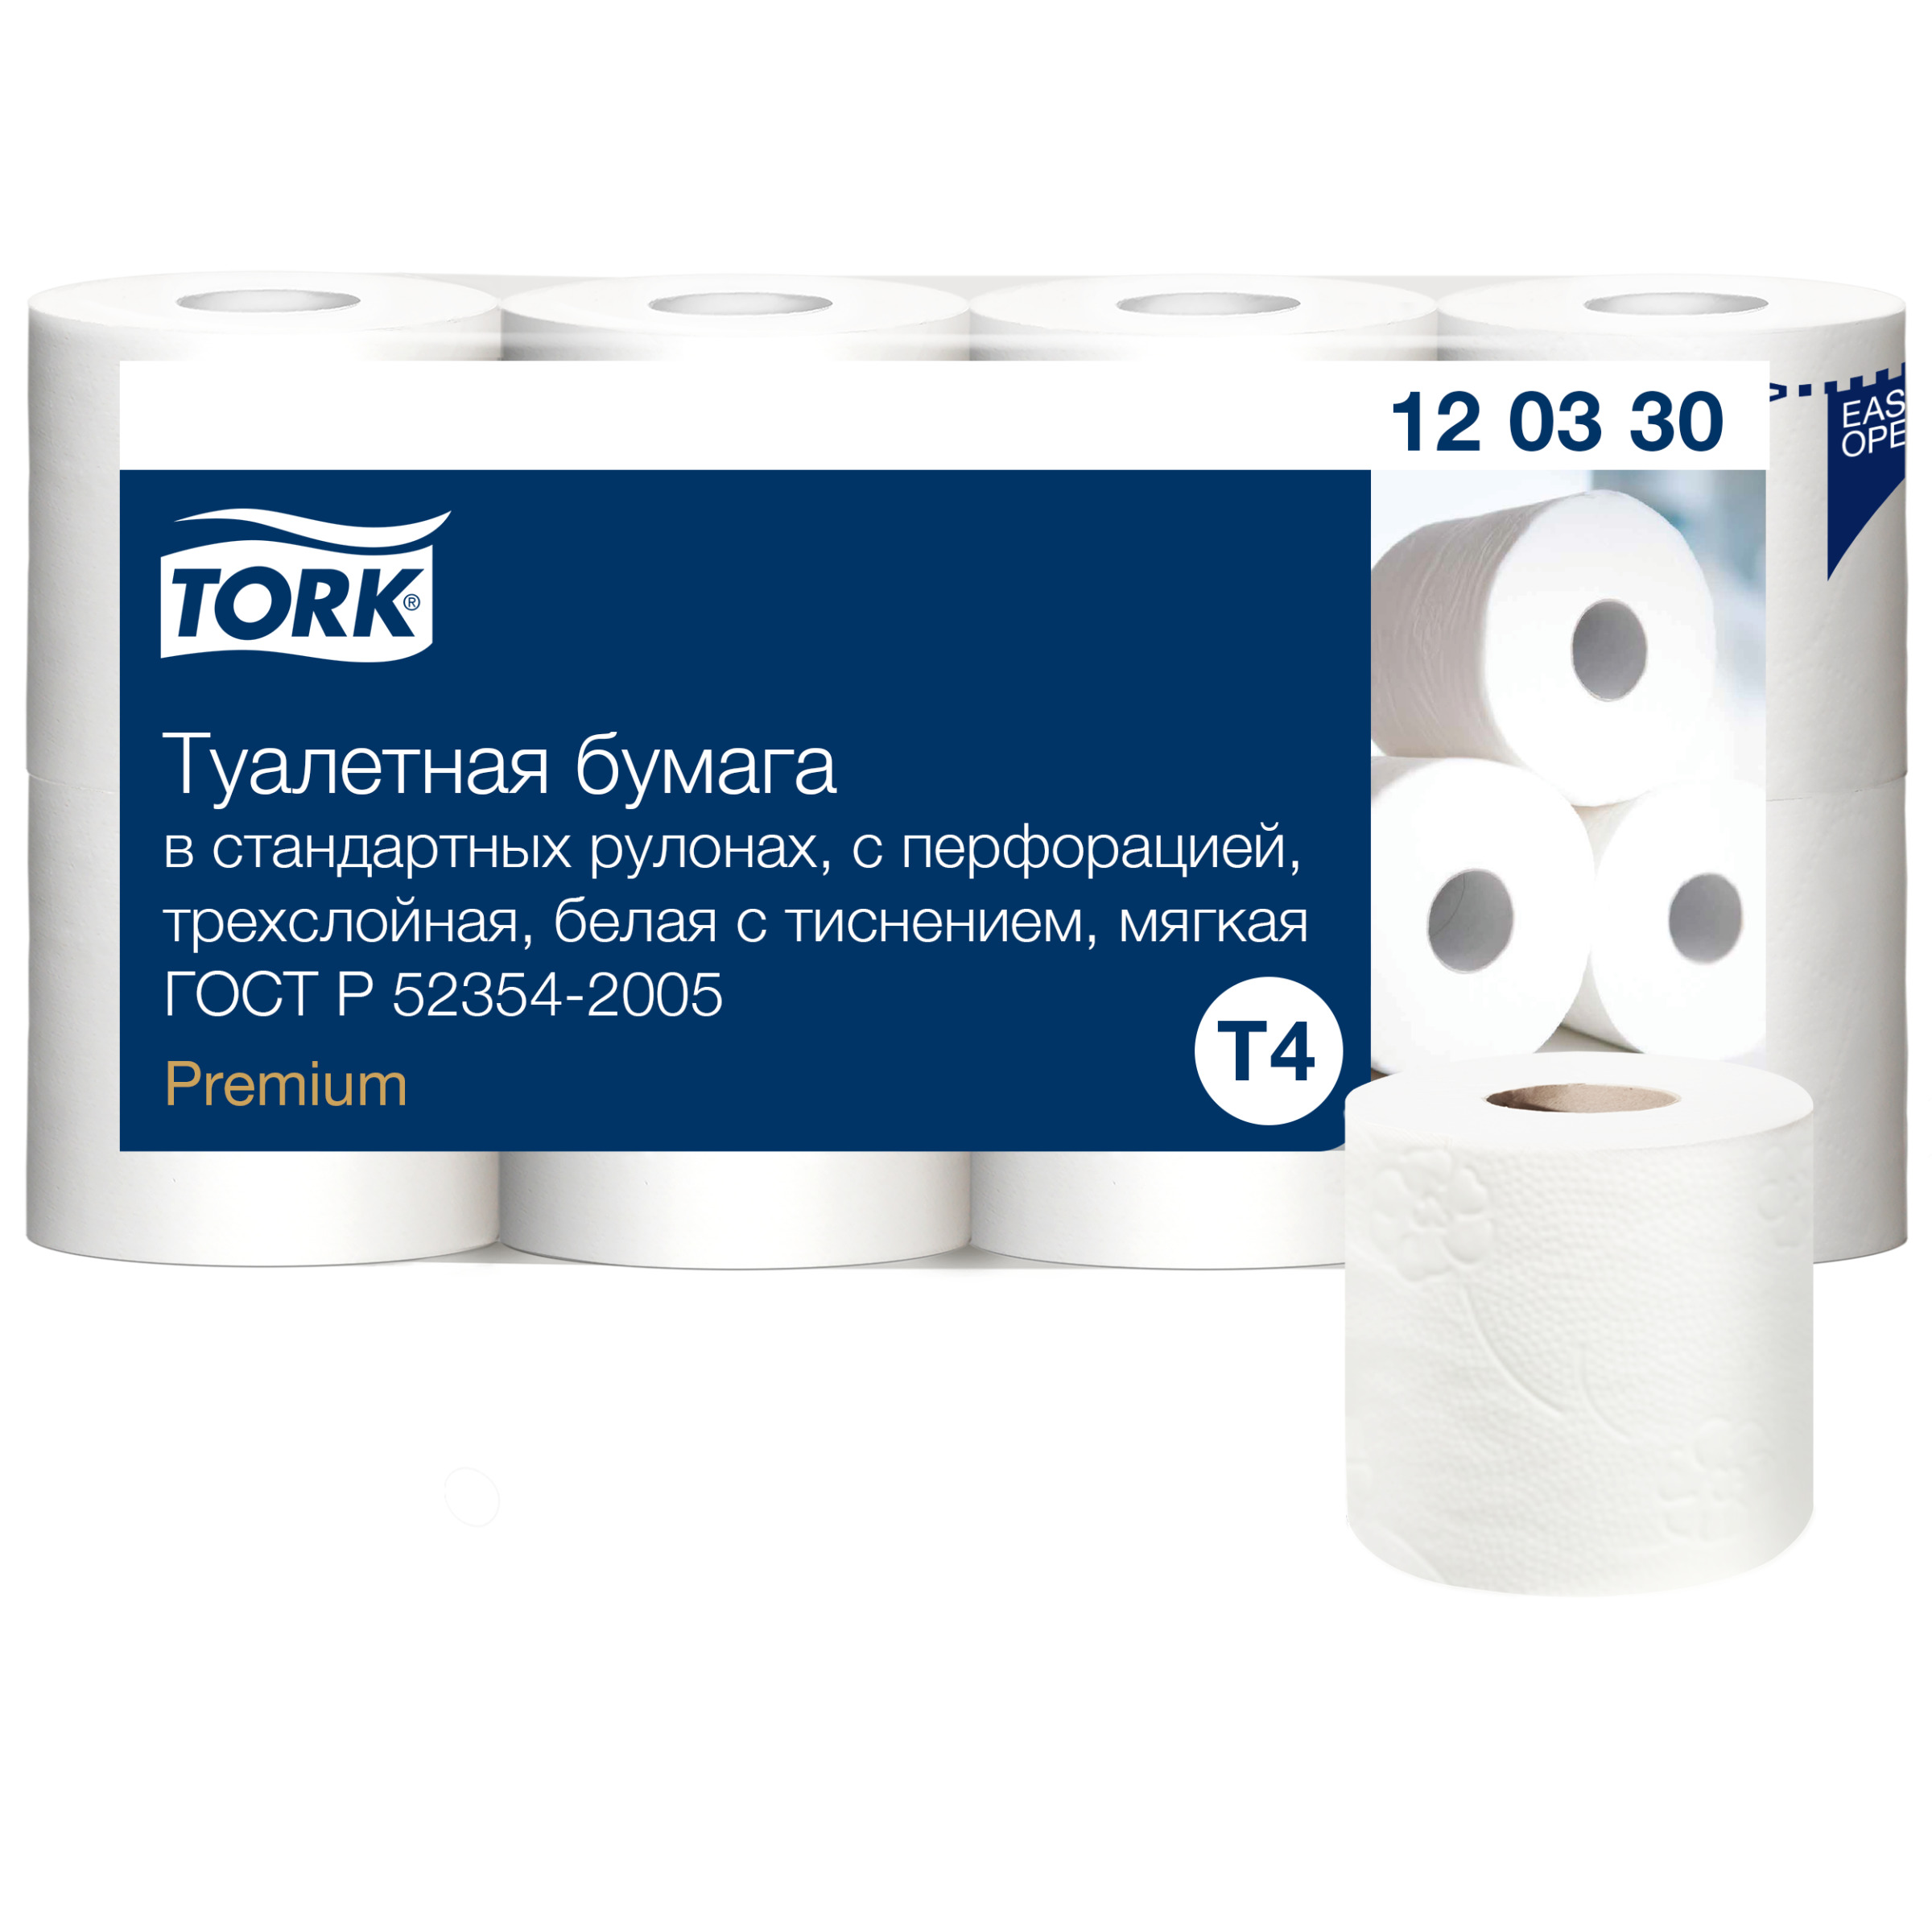 Туалетная бумага Tork в стандартных рулонах, T4, 3 слоя, 8 рул., 12 уп туалетная бумага tork premium в рулонах t4 184 листа 2 сл 8 рул 12 упаковок